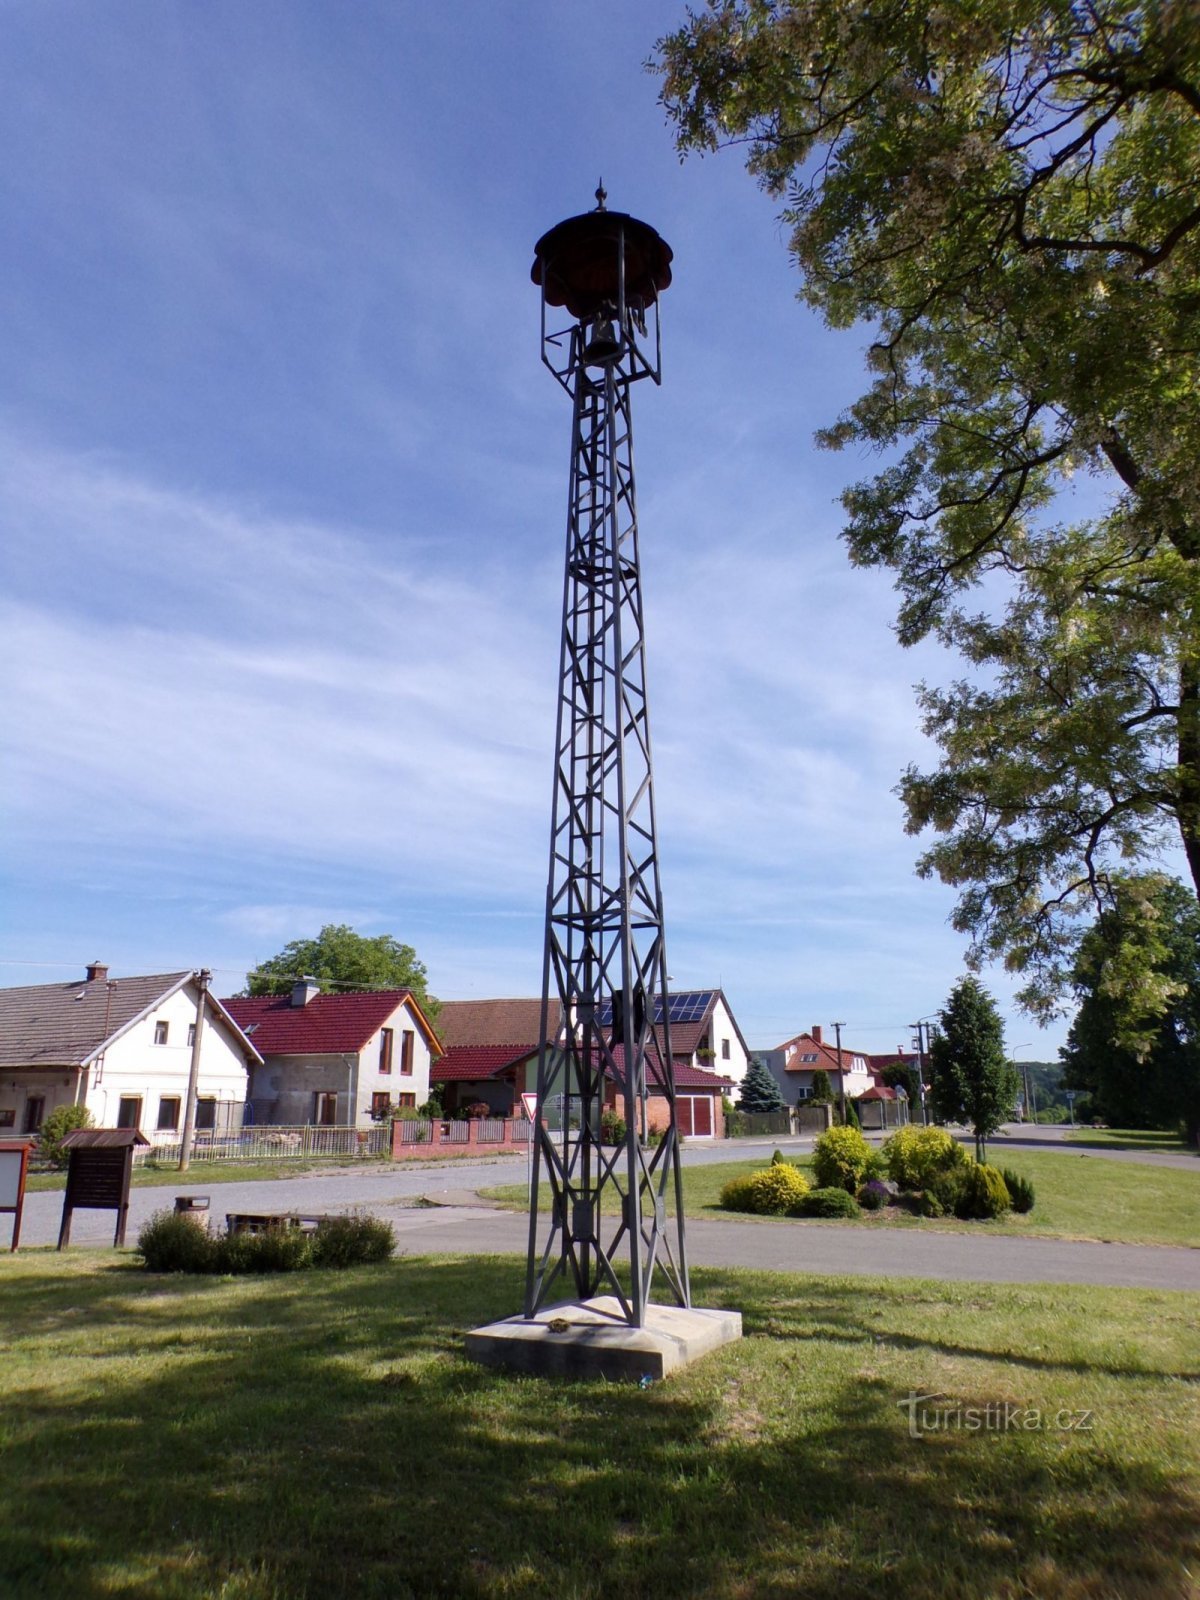 Tháp truyền giáo (Jeníkovice, ngày 15.6.2021 tháng XNUMX năm XNUMX)